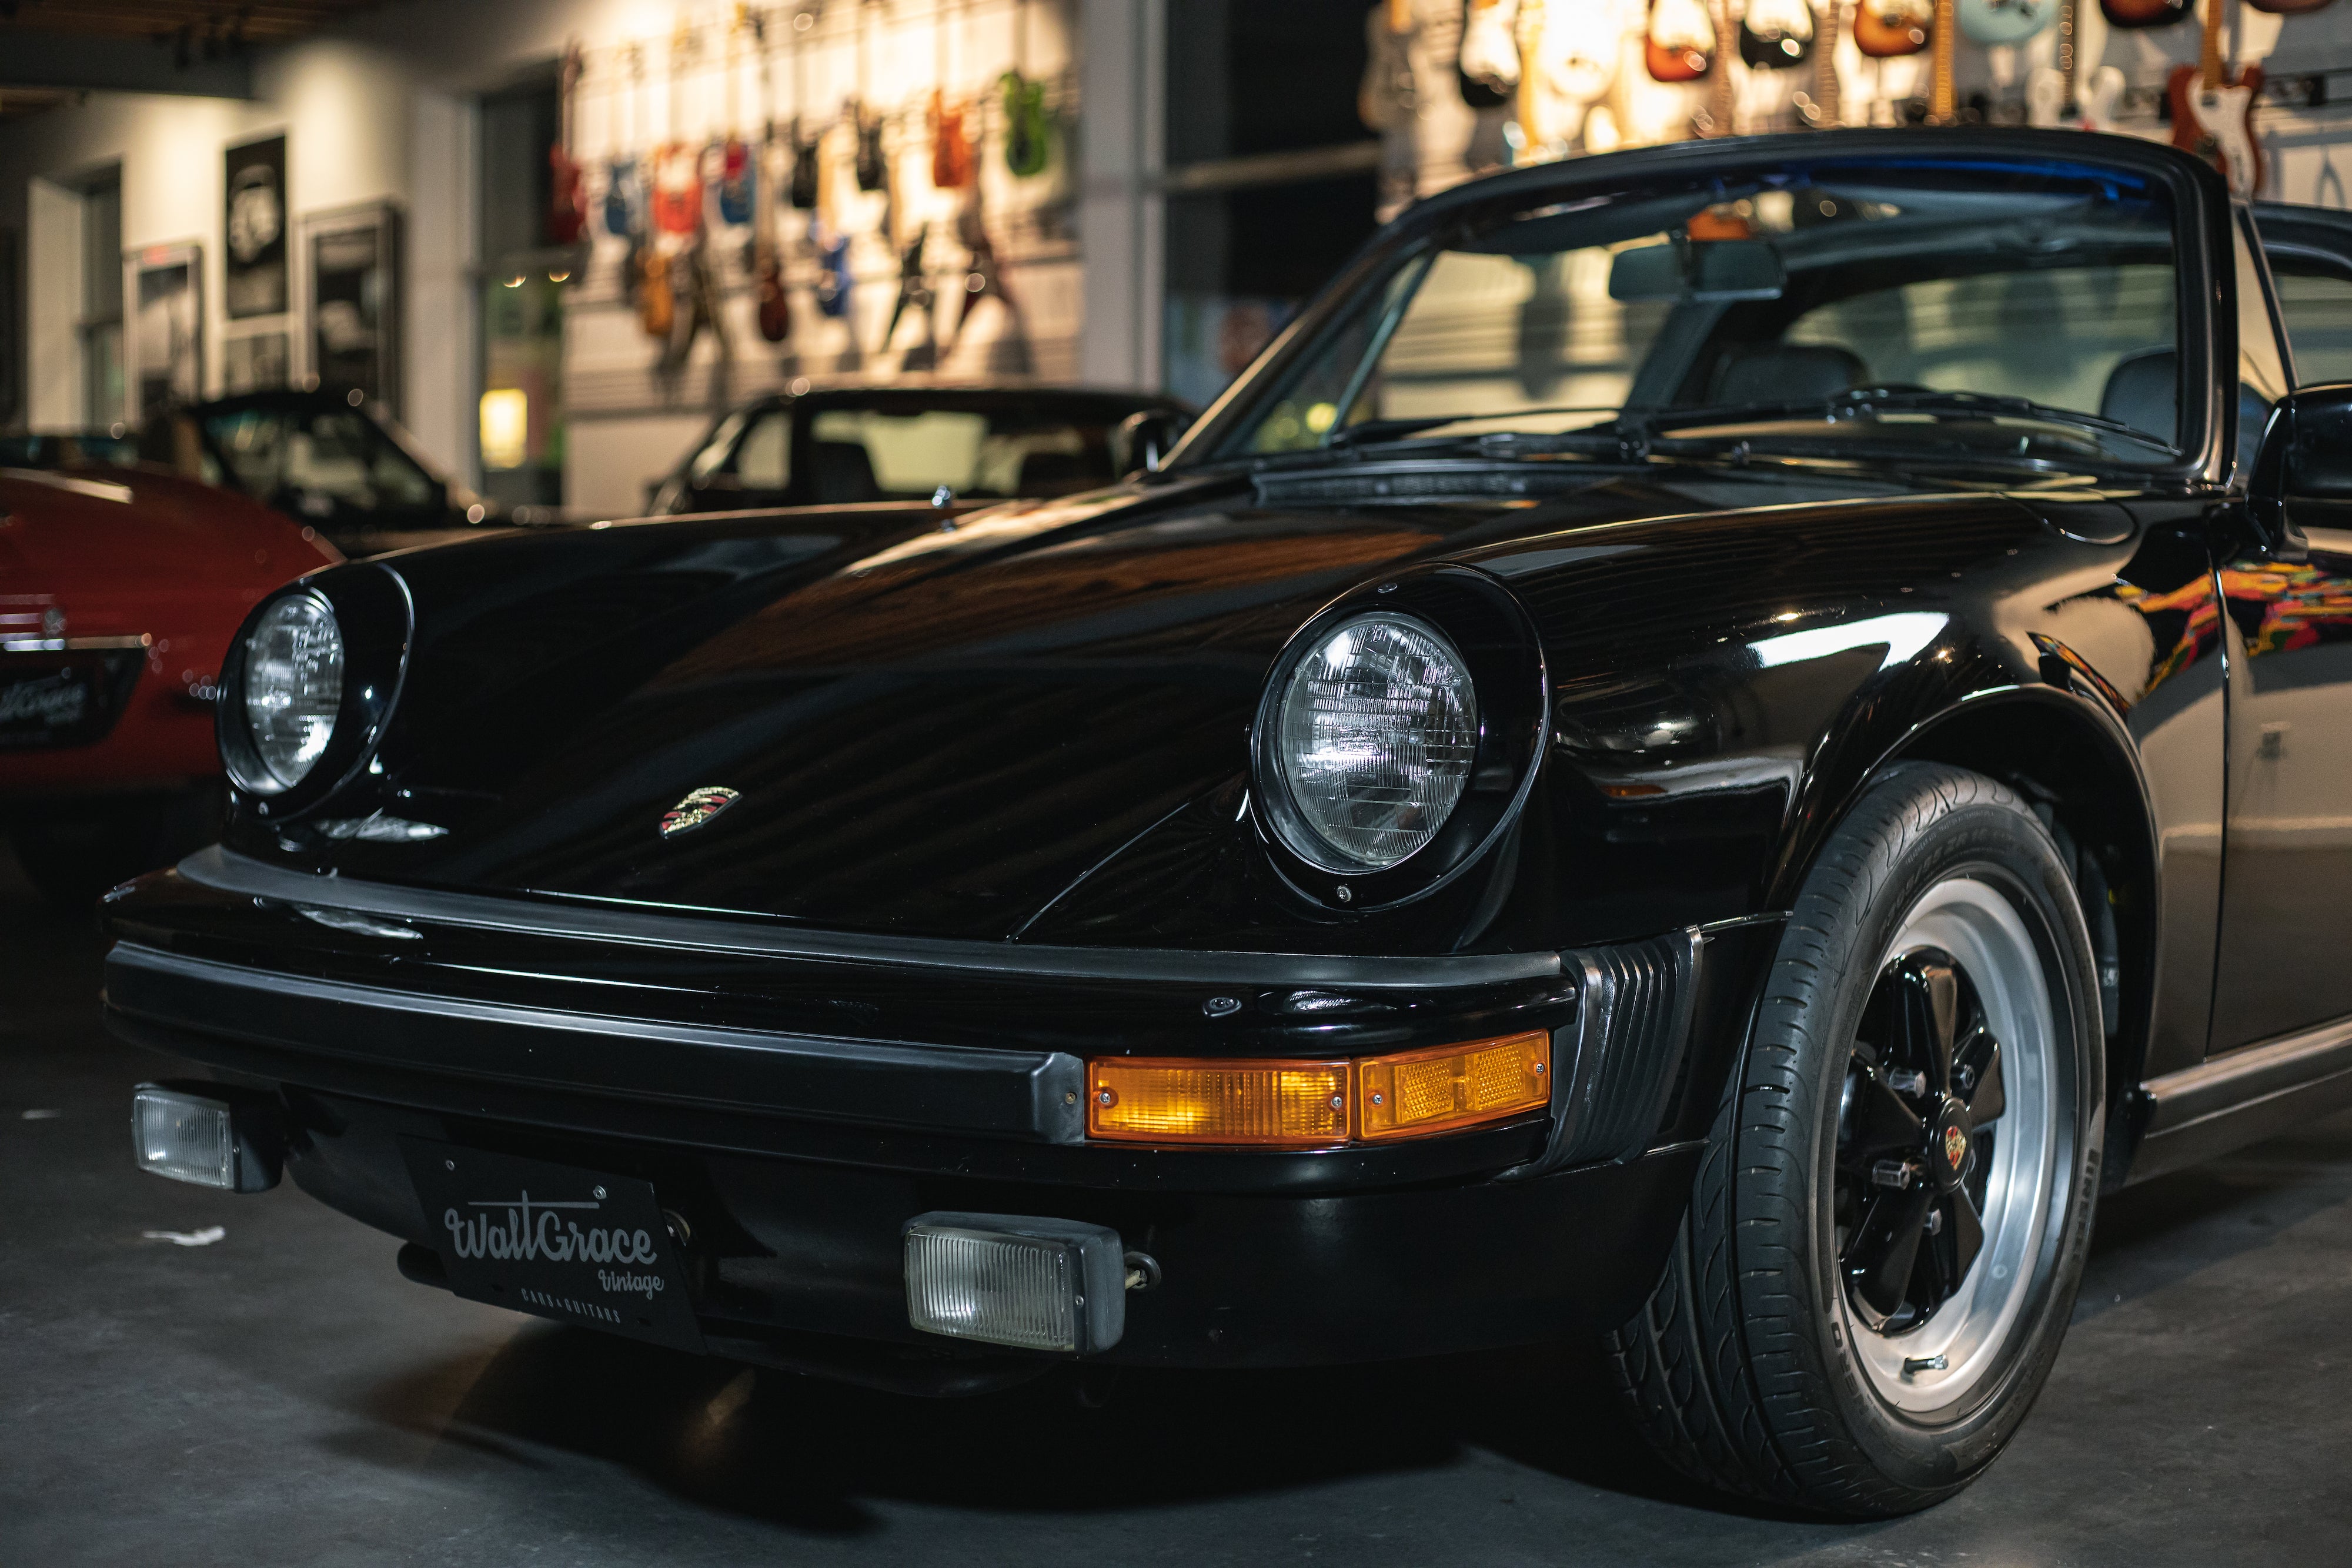 1983 Porsche 911 SC Targa - Black – Walt Grace Vintage